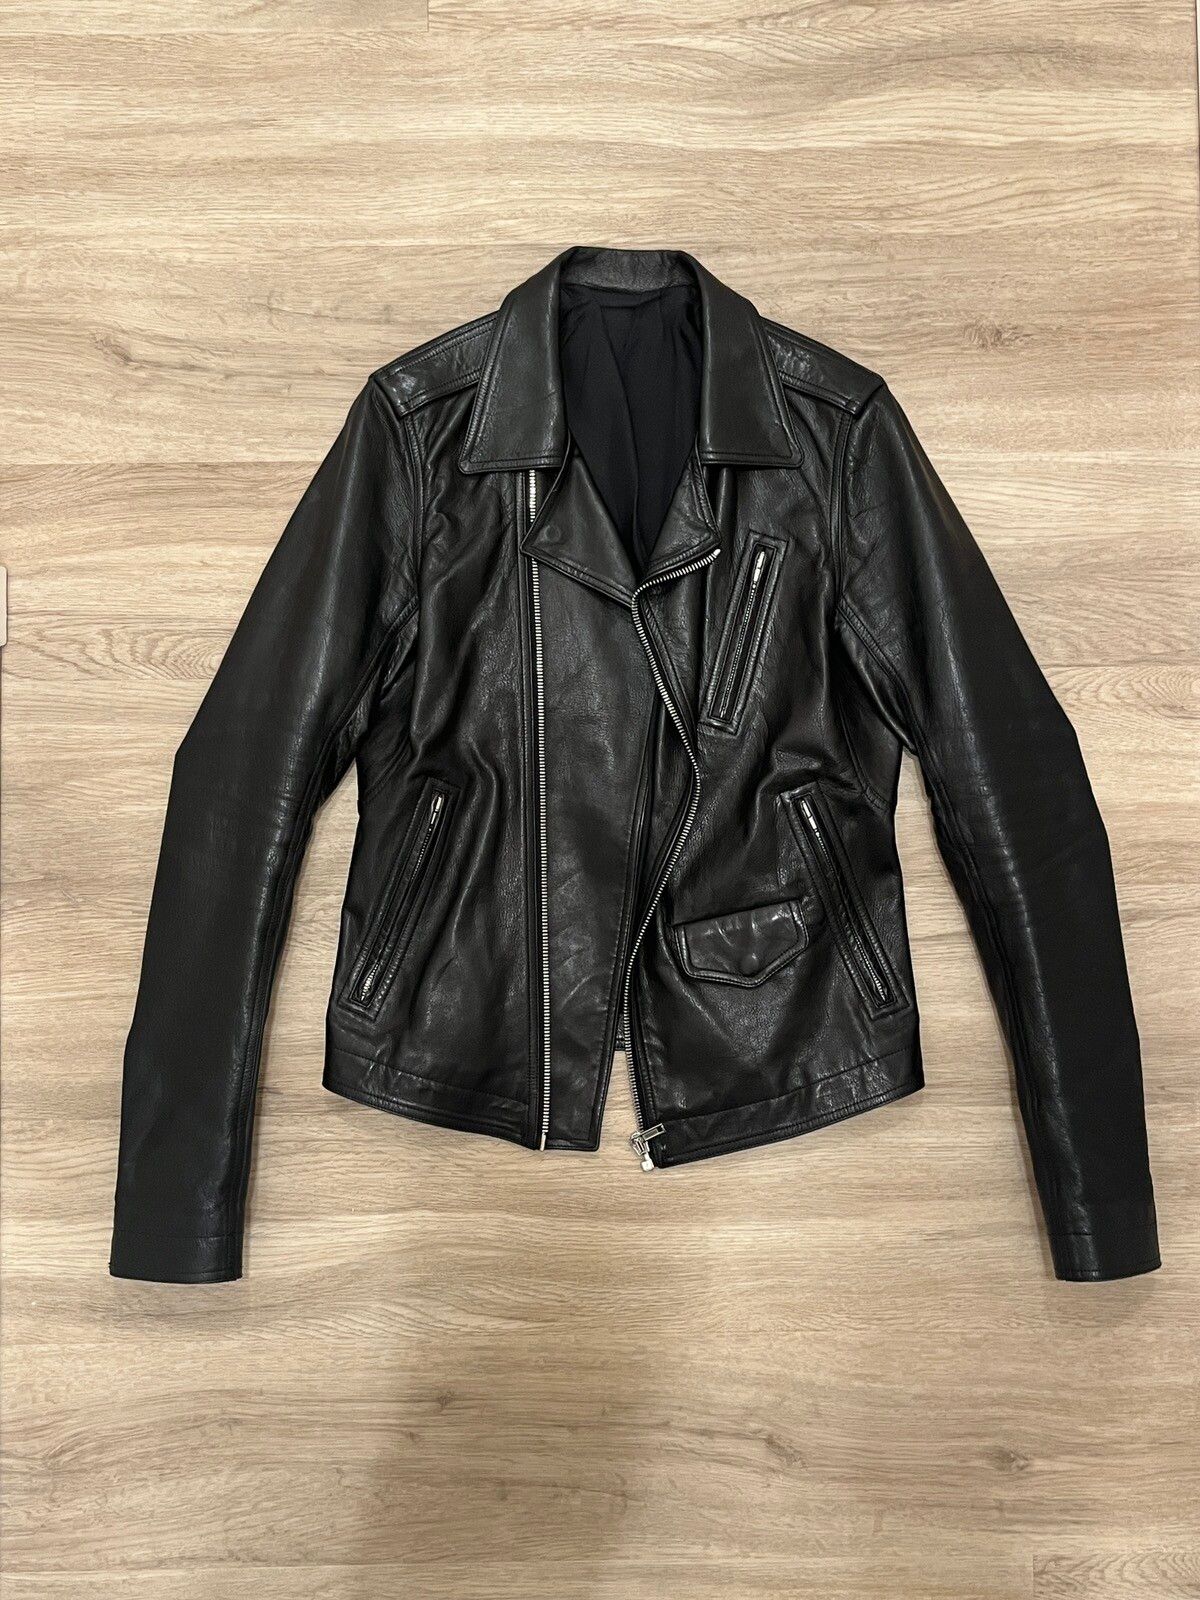 Rick Owens Rick Owens Stooges Leather Jacket | Grailed